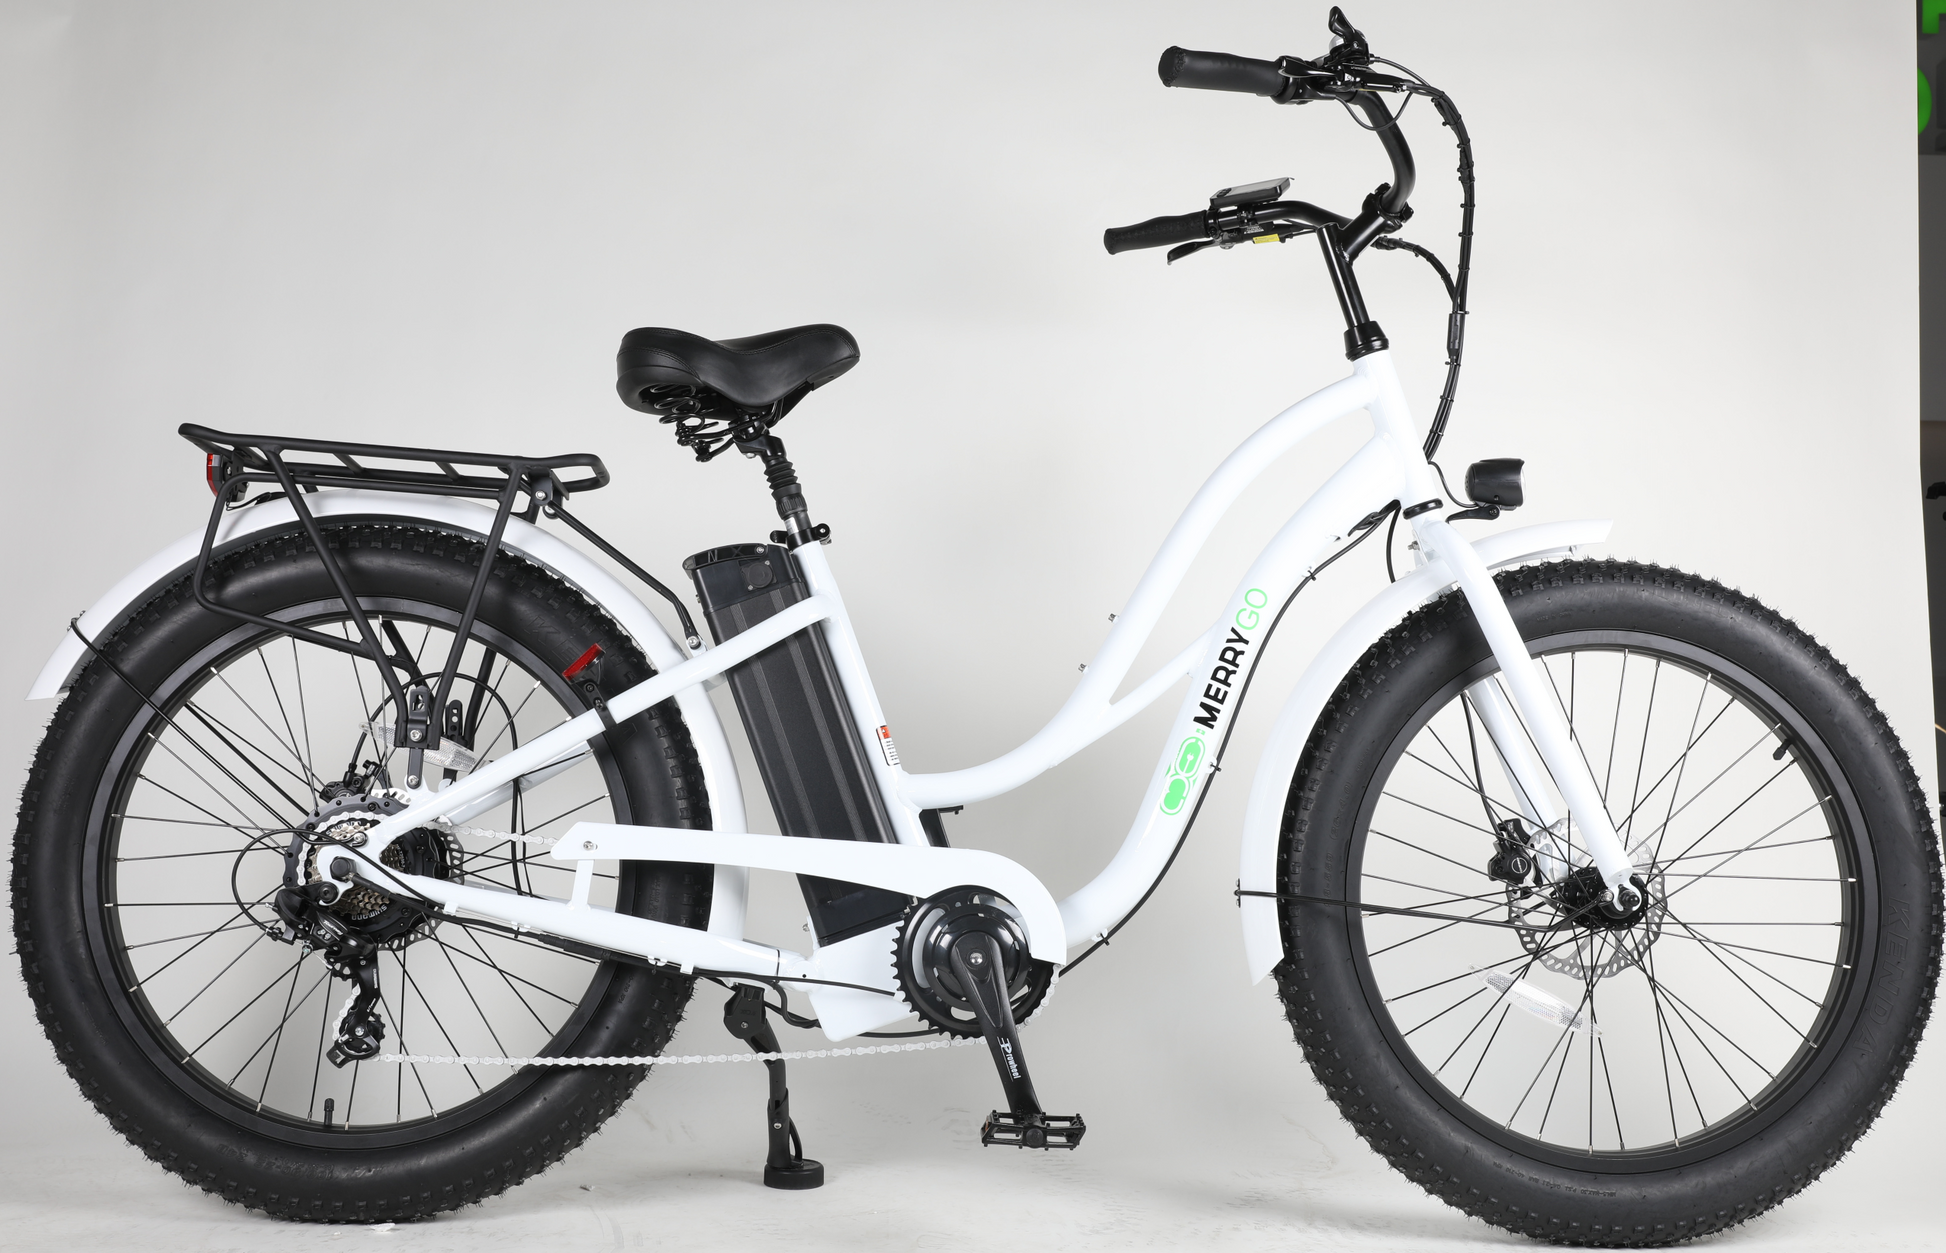 Electric bike specifications: 48volt 500 watt Bafang motor, Samsung Lithium ION Battery, Kenda tires, Shimano Gears, Tektro Hydraulic Disc brakes, Electric Fat Tire Bikes, Electric Mountain Bike, Ebike